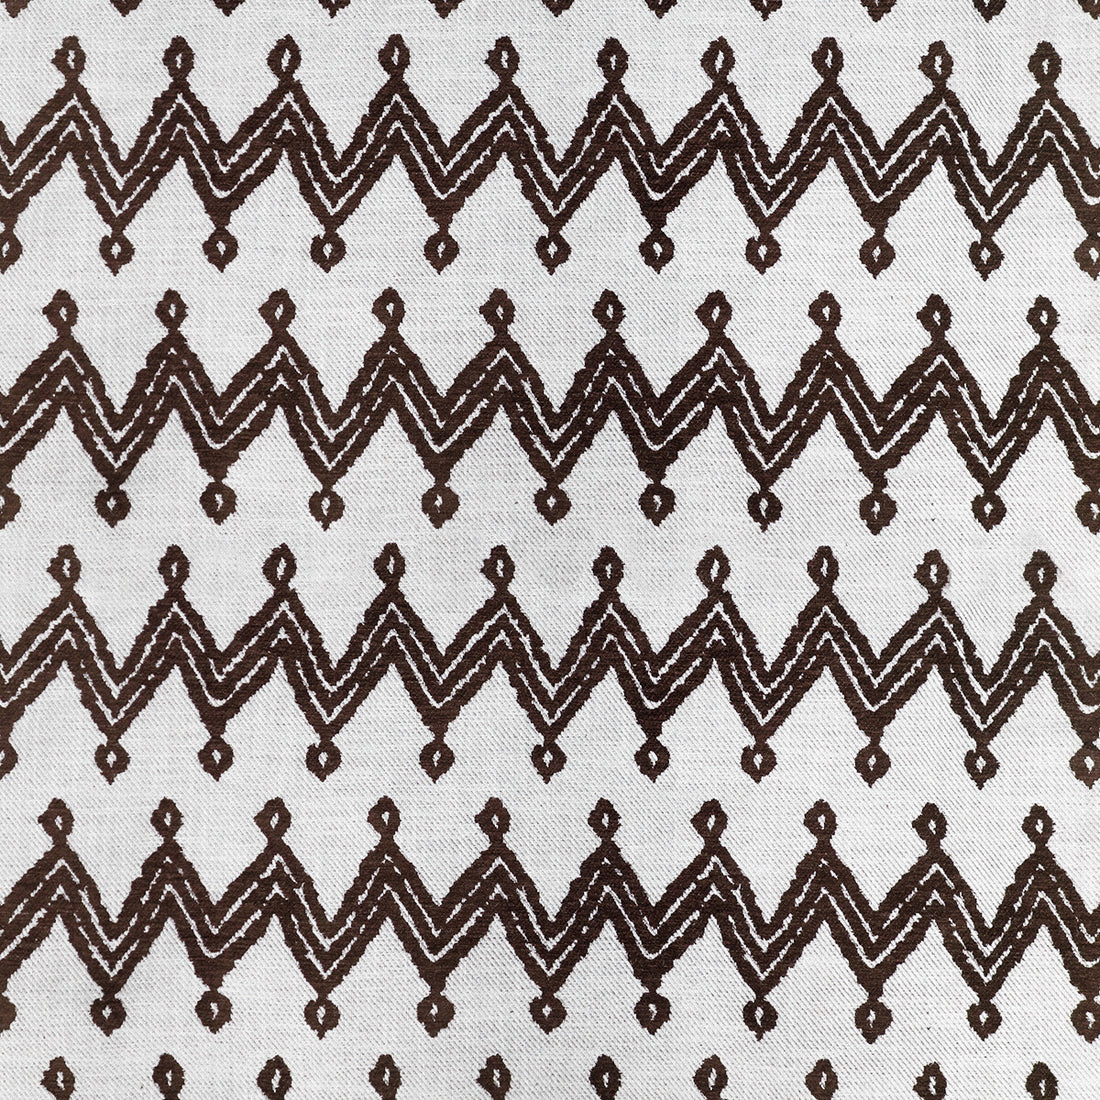 Navajo fabric in chocolate color - pattern GDT5653.004.0 - by Gaston y Daniela in the Gaston Rio Grande collection